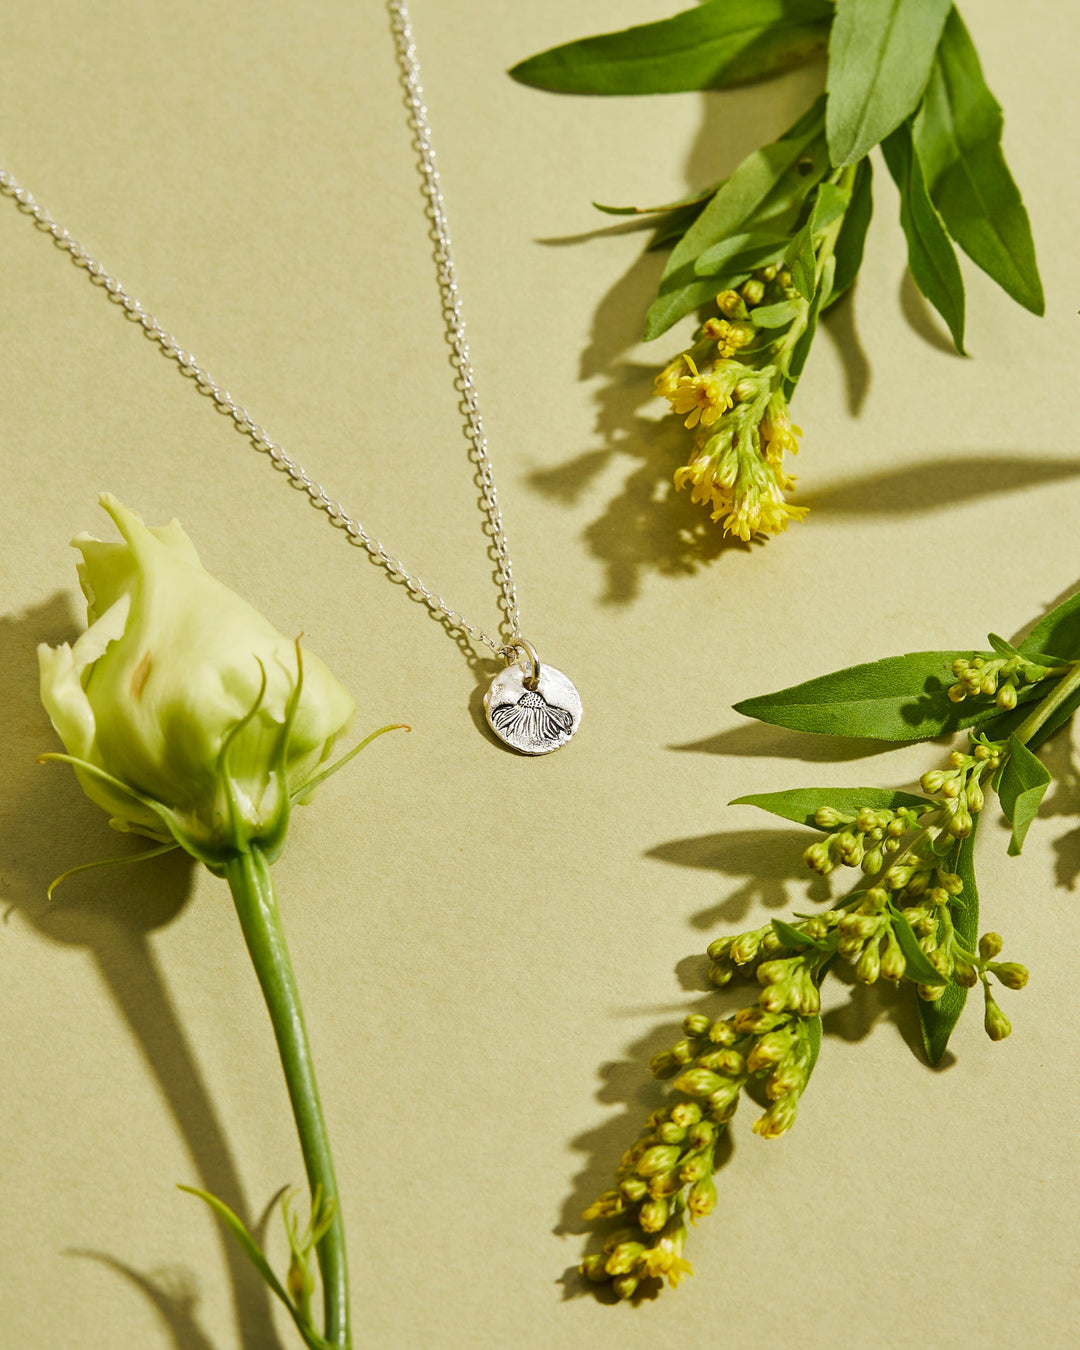 echinacea wildflower pendant necklace